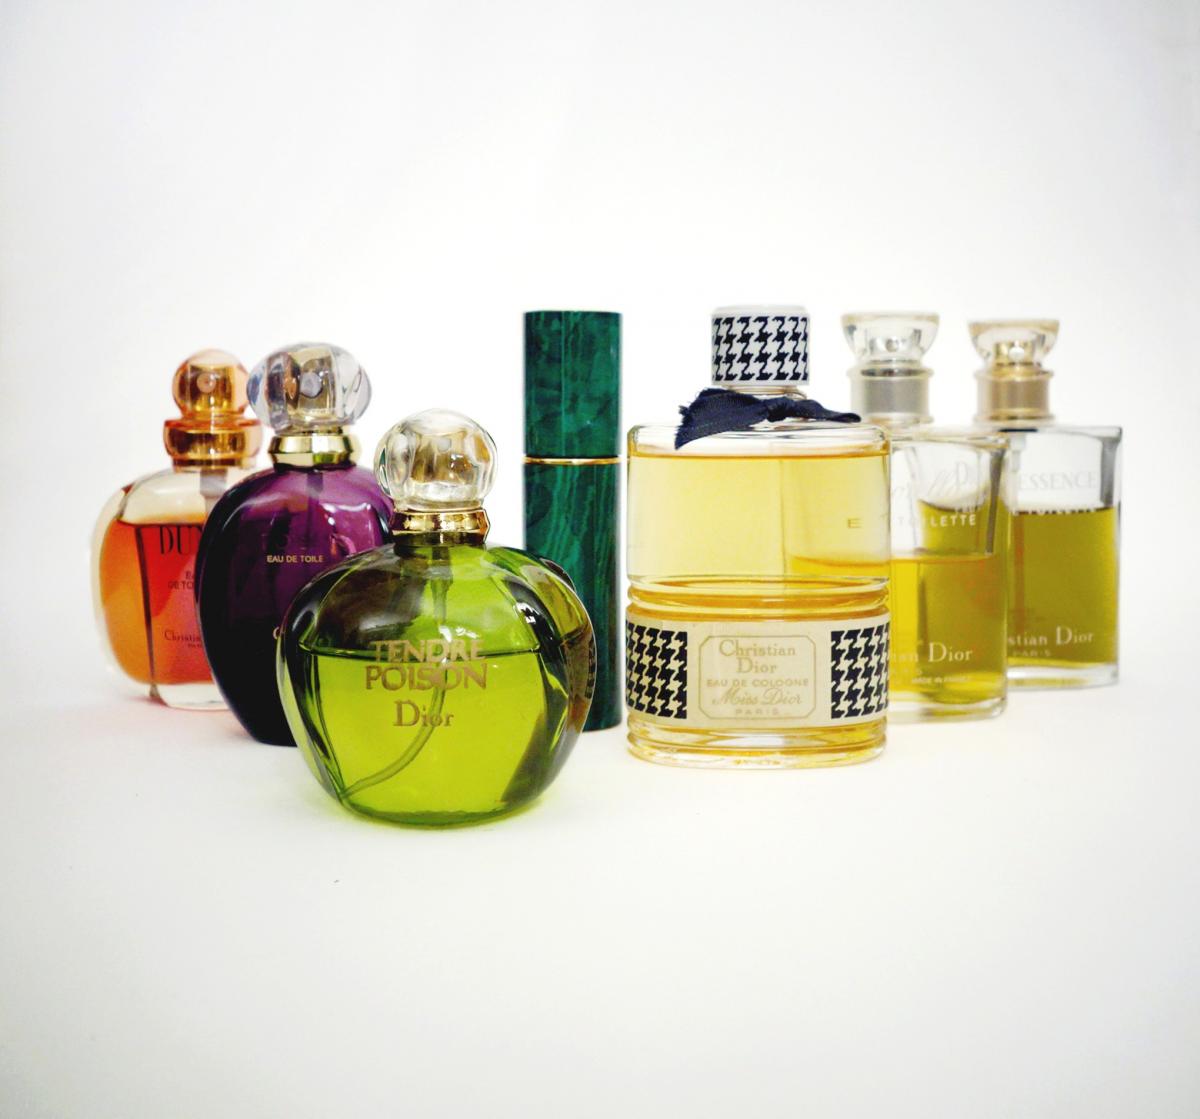 Dioressence Christian Dior perfume - a fragrance for women 1979